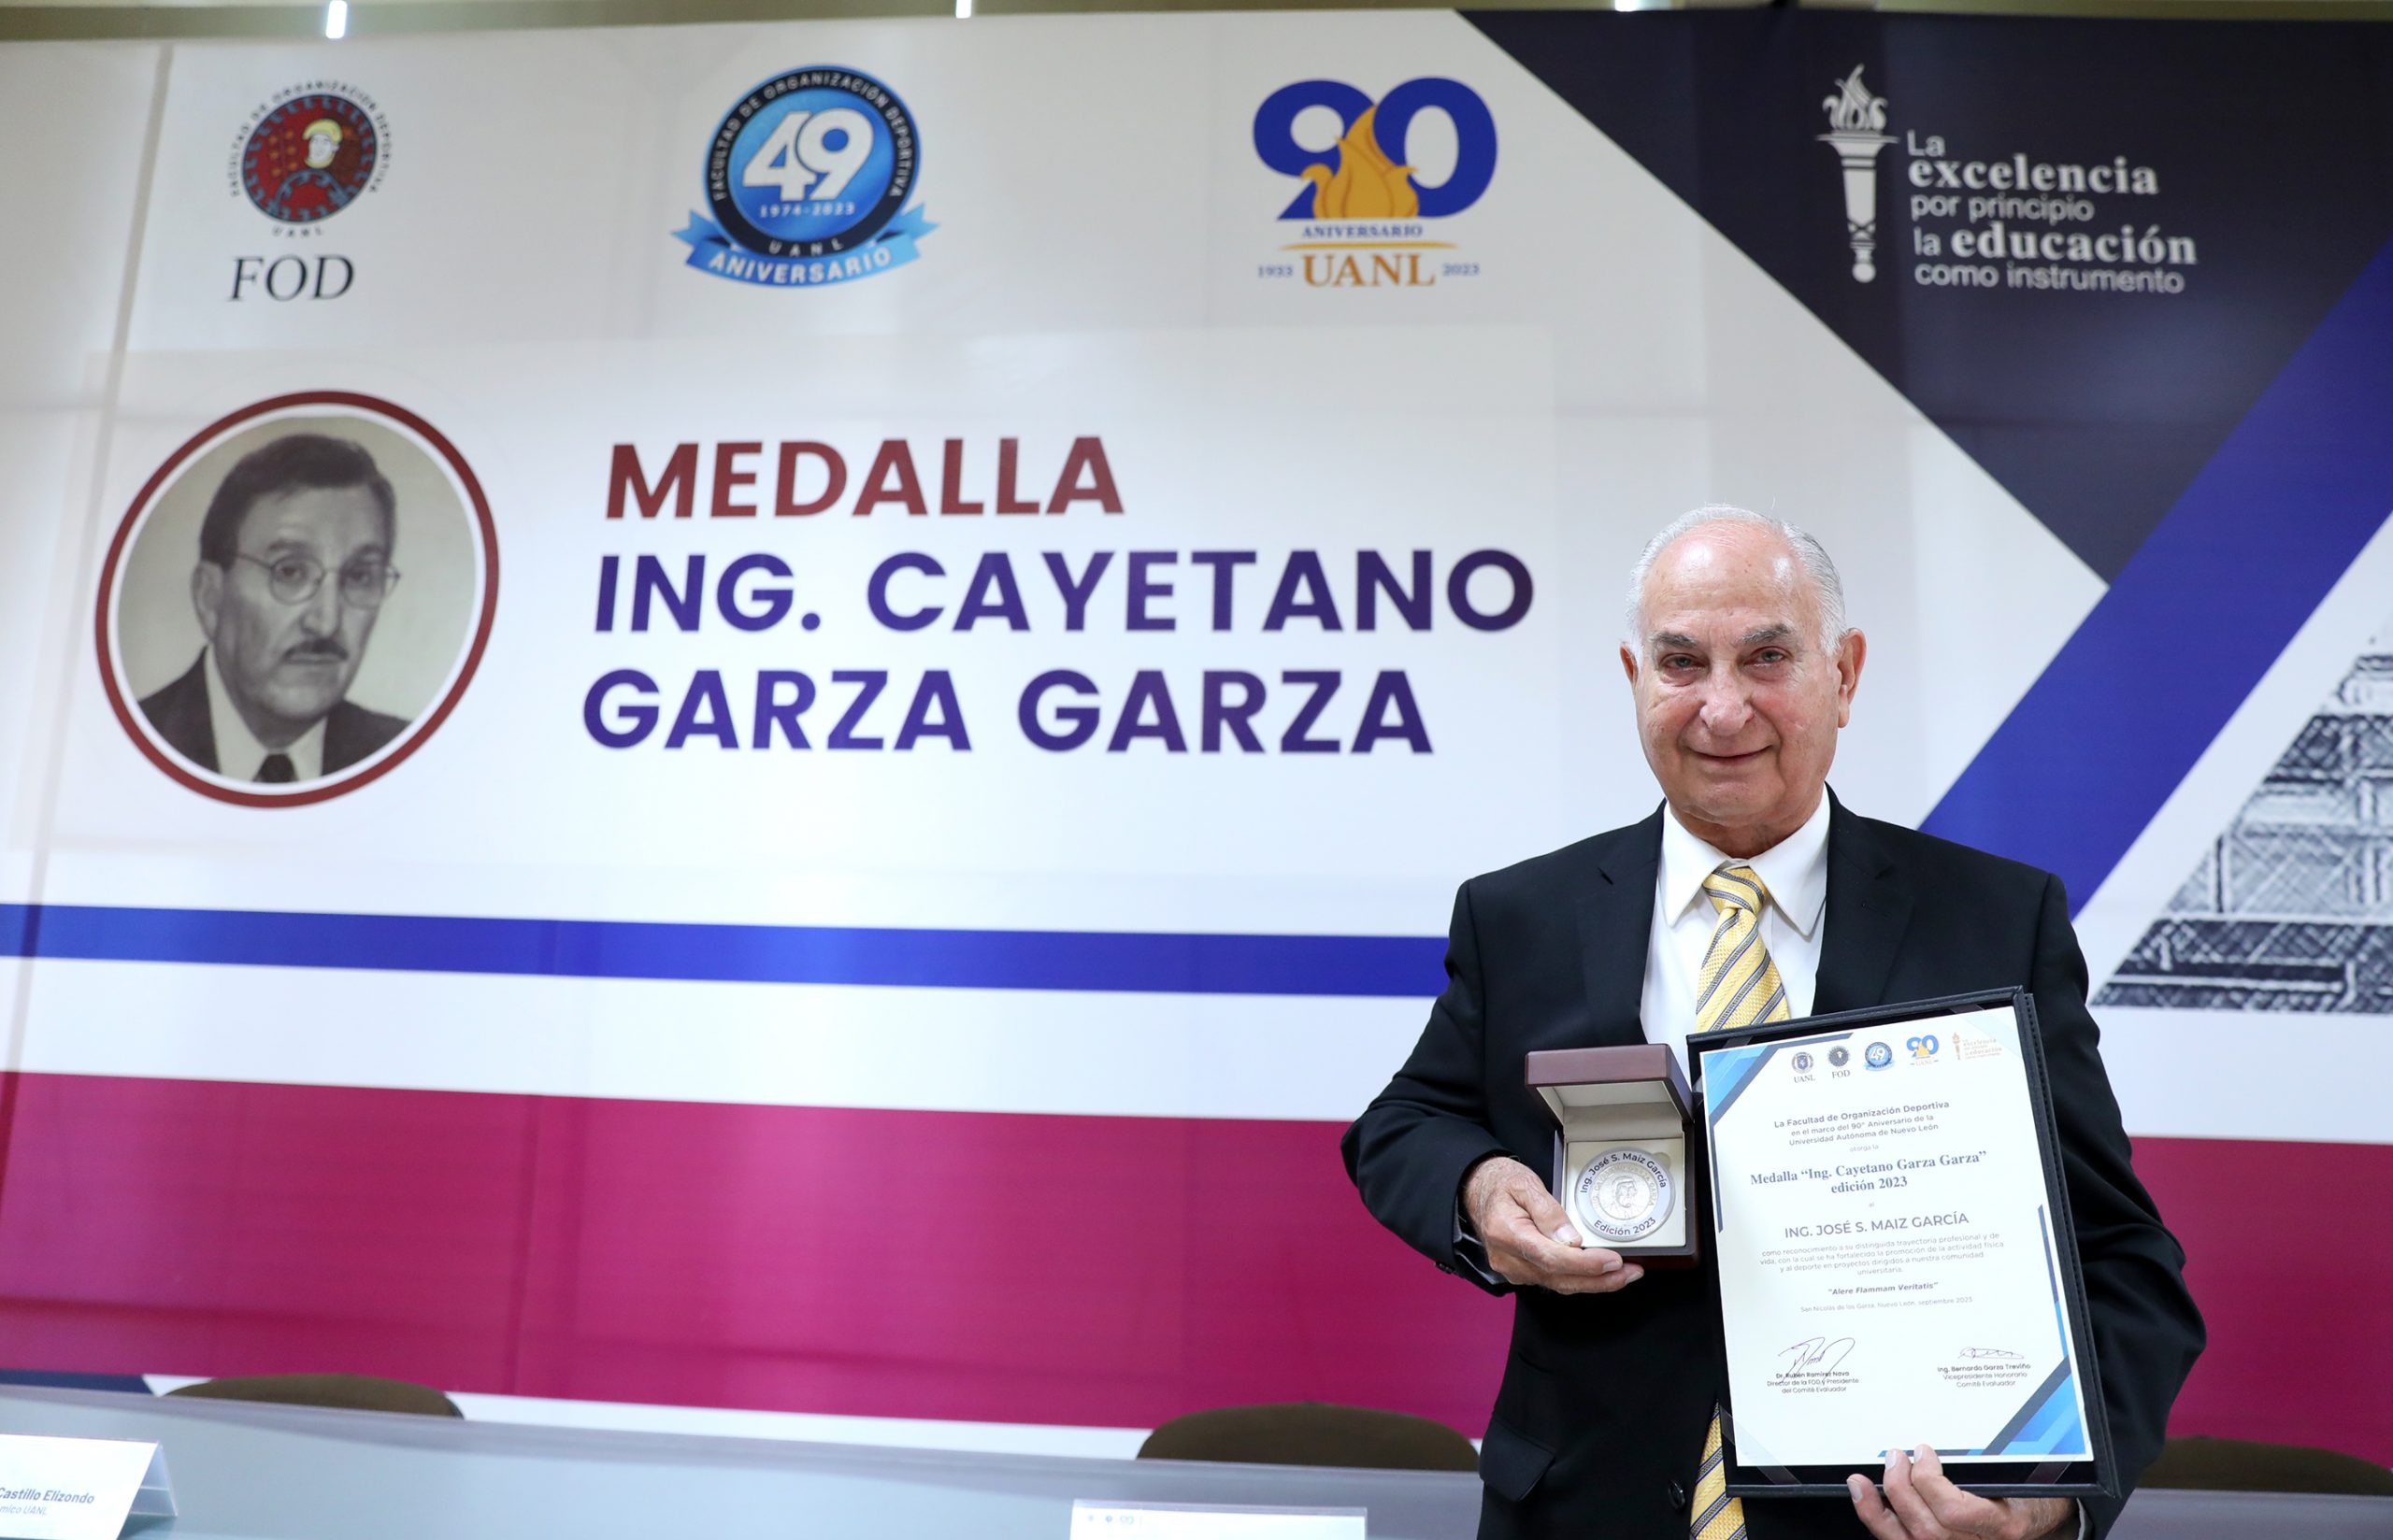 Otorgan Medalla “Ing. Cayetano Garza Garza” a José Maiz